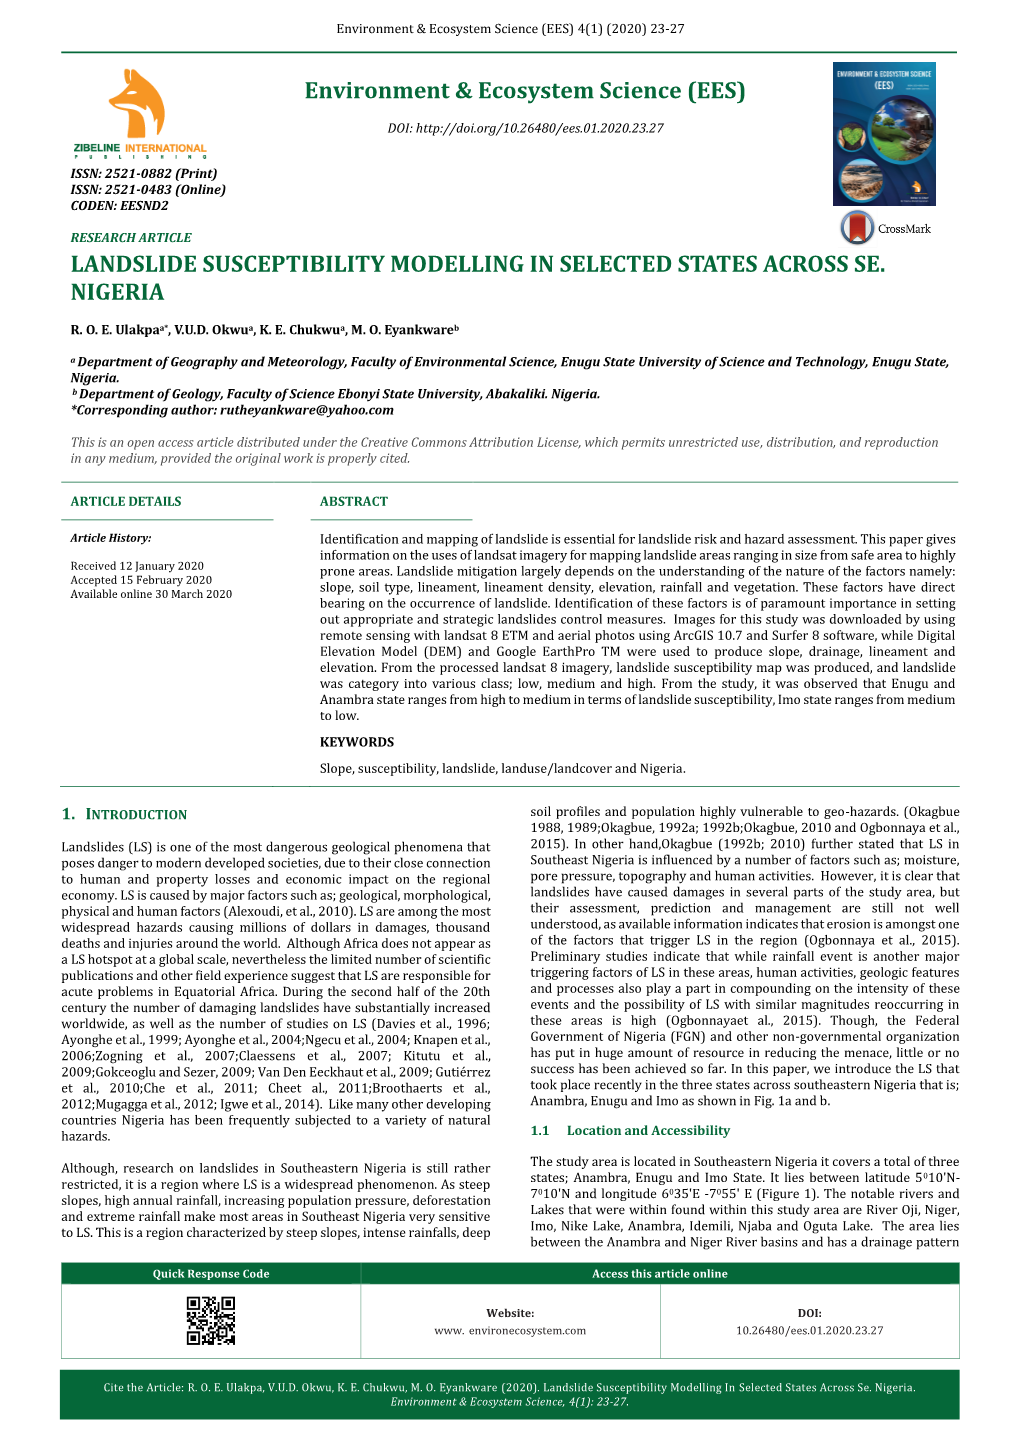 Landslide Susceptibility Modelling in Selected States Across Se